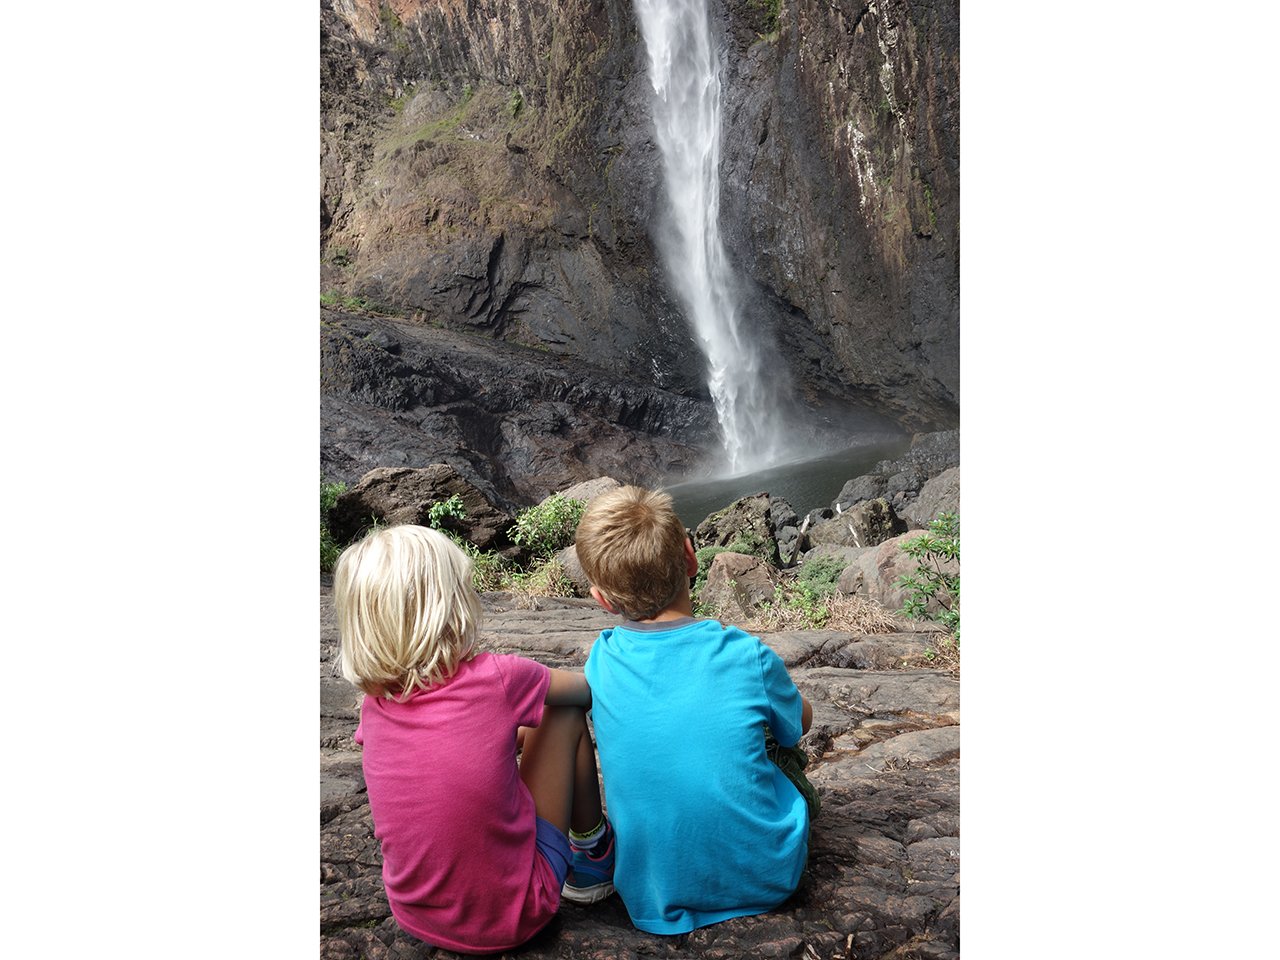 Salomon kids enjoying a waterfall